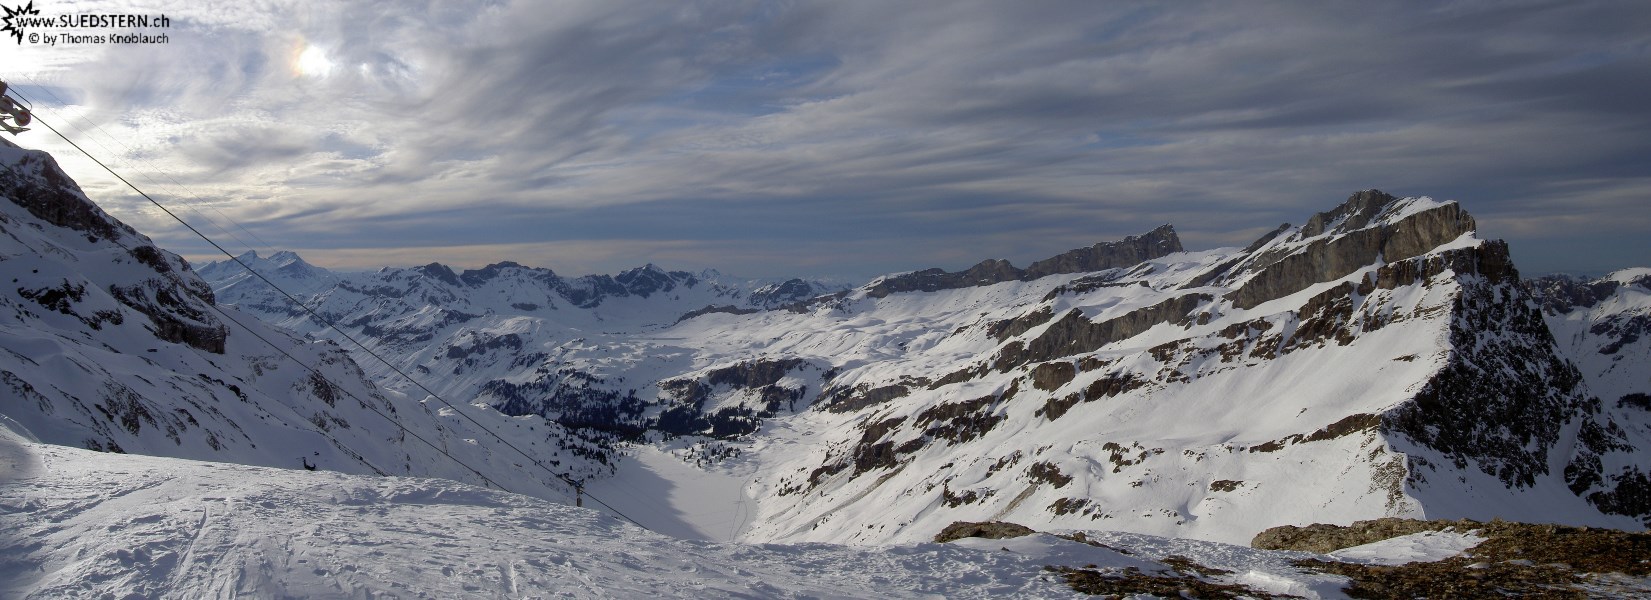 2008-01-29 - Mountains near Titlis, Switzerland